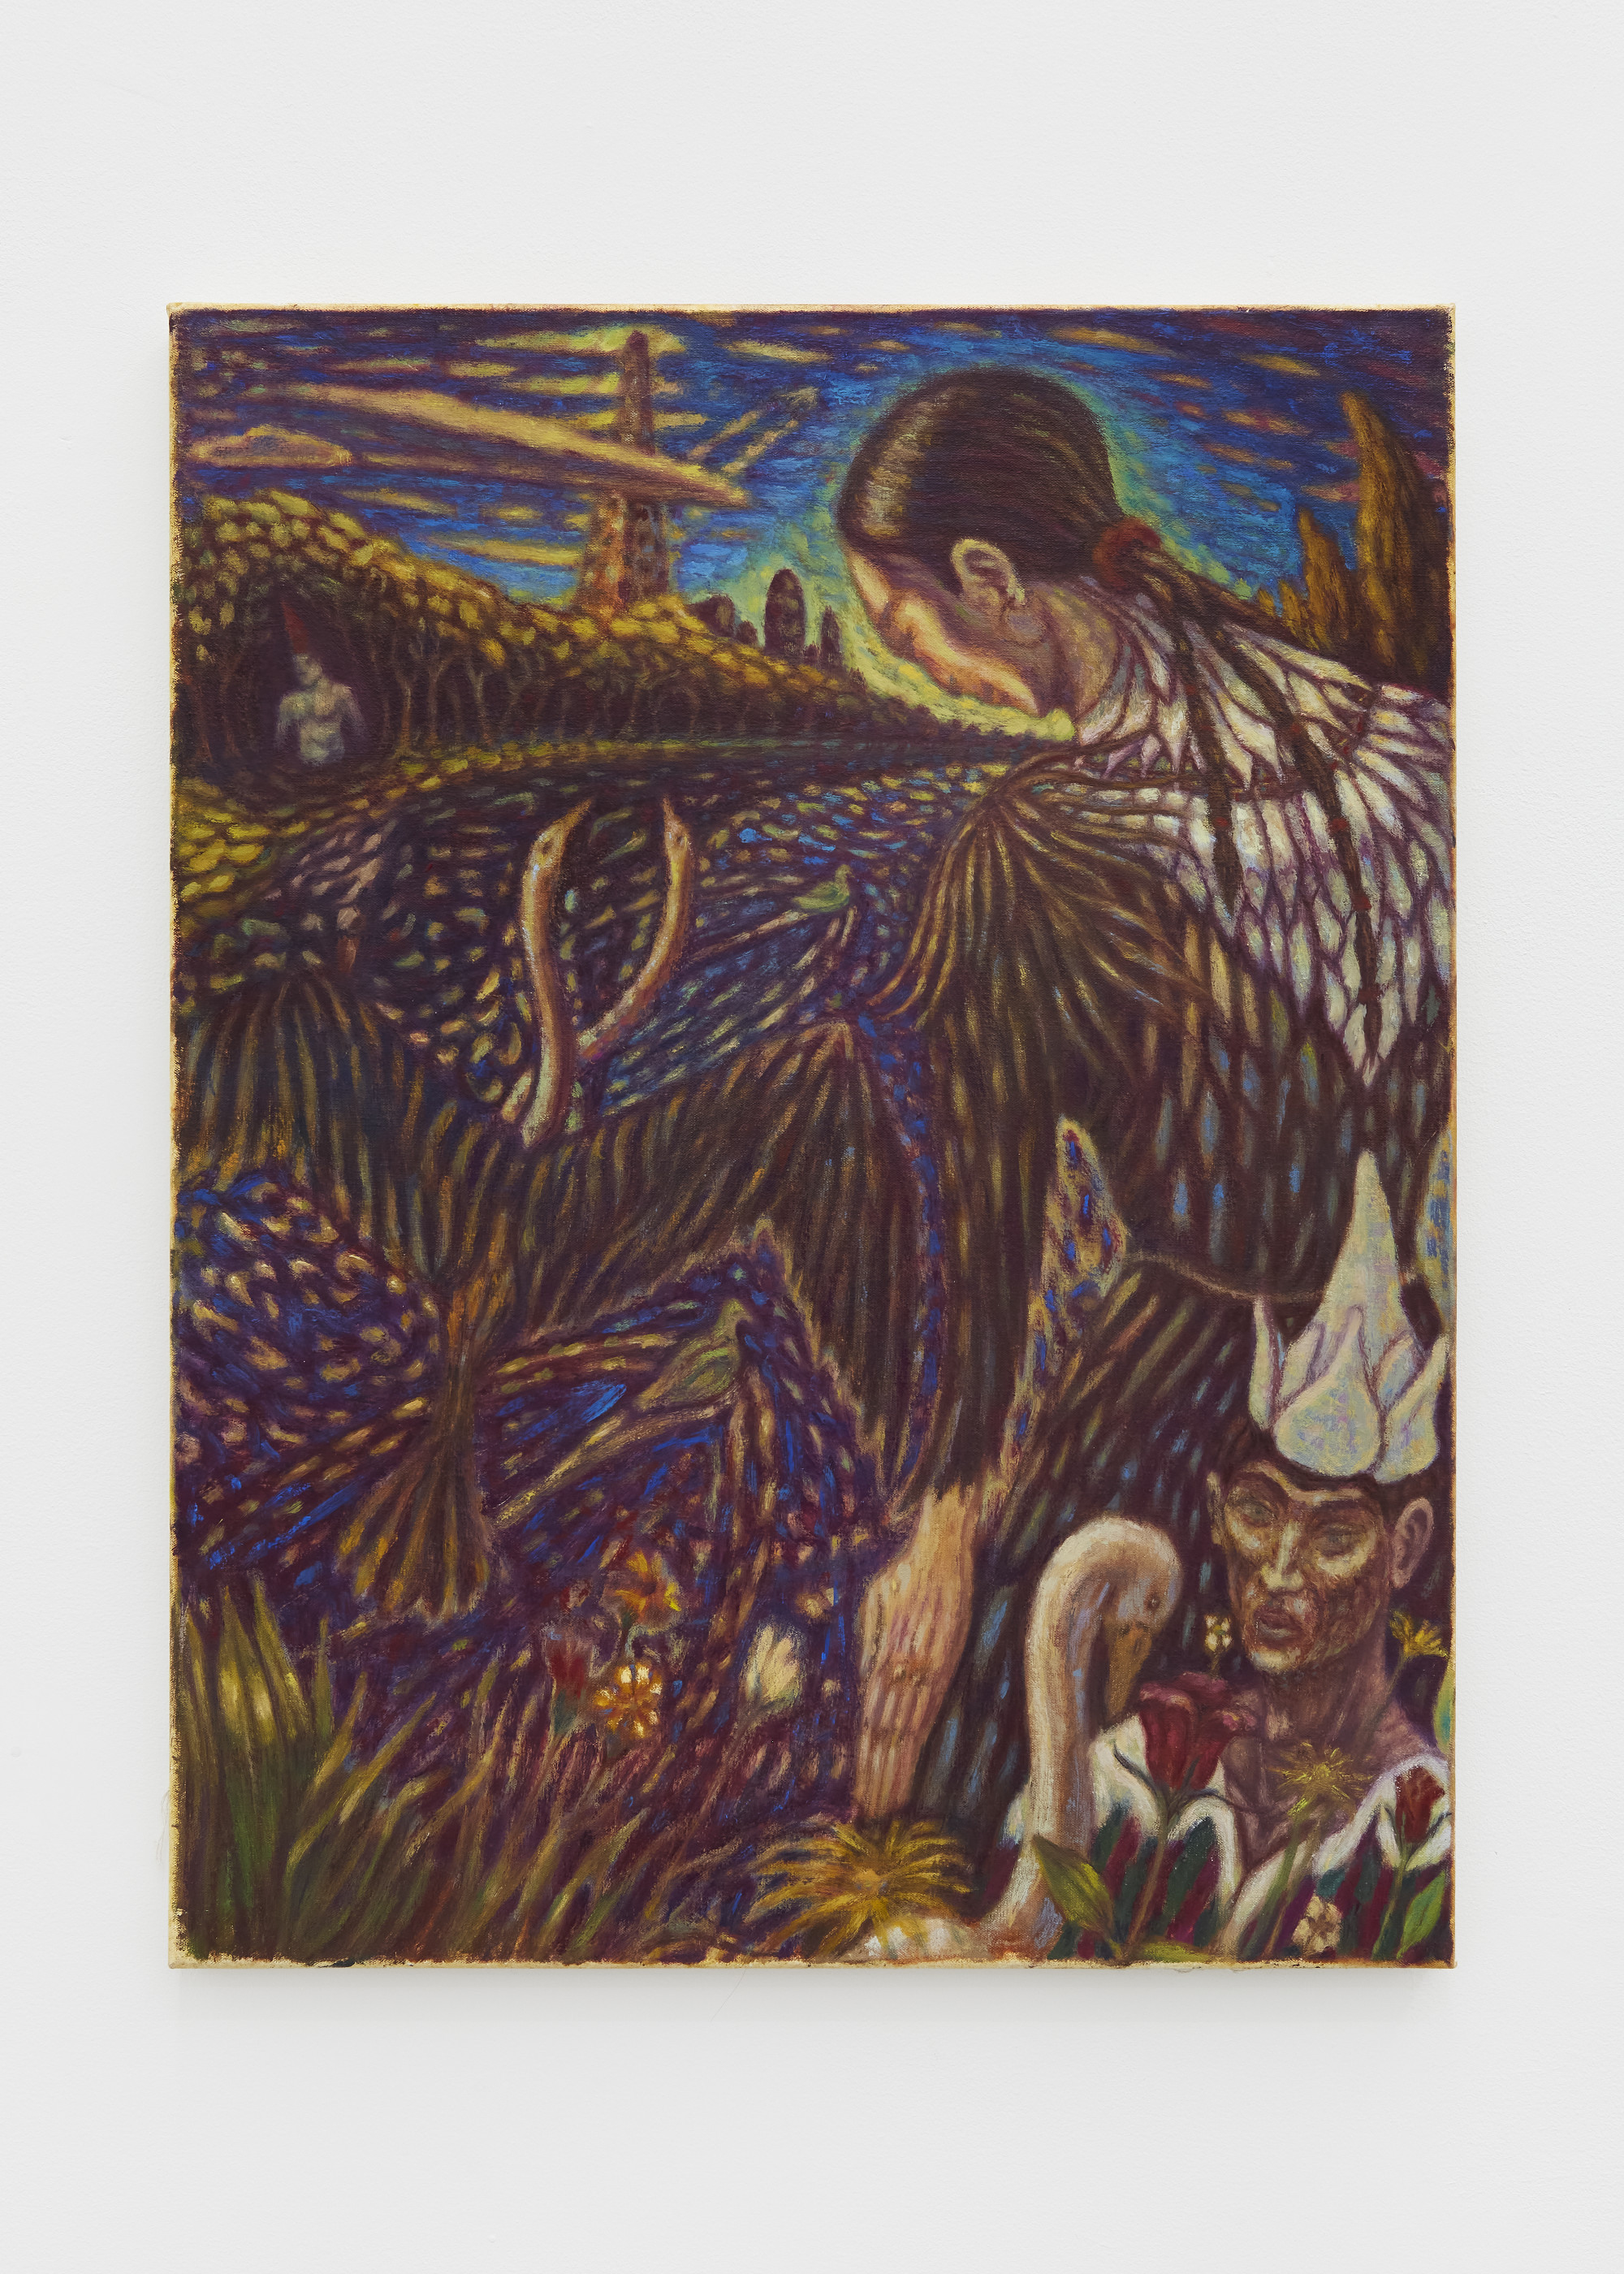   Stephen Polatch, Three Plaits, 2023. Oil on canvas, 66 x 51 cm